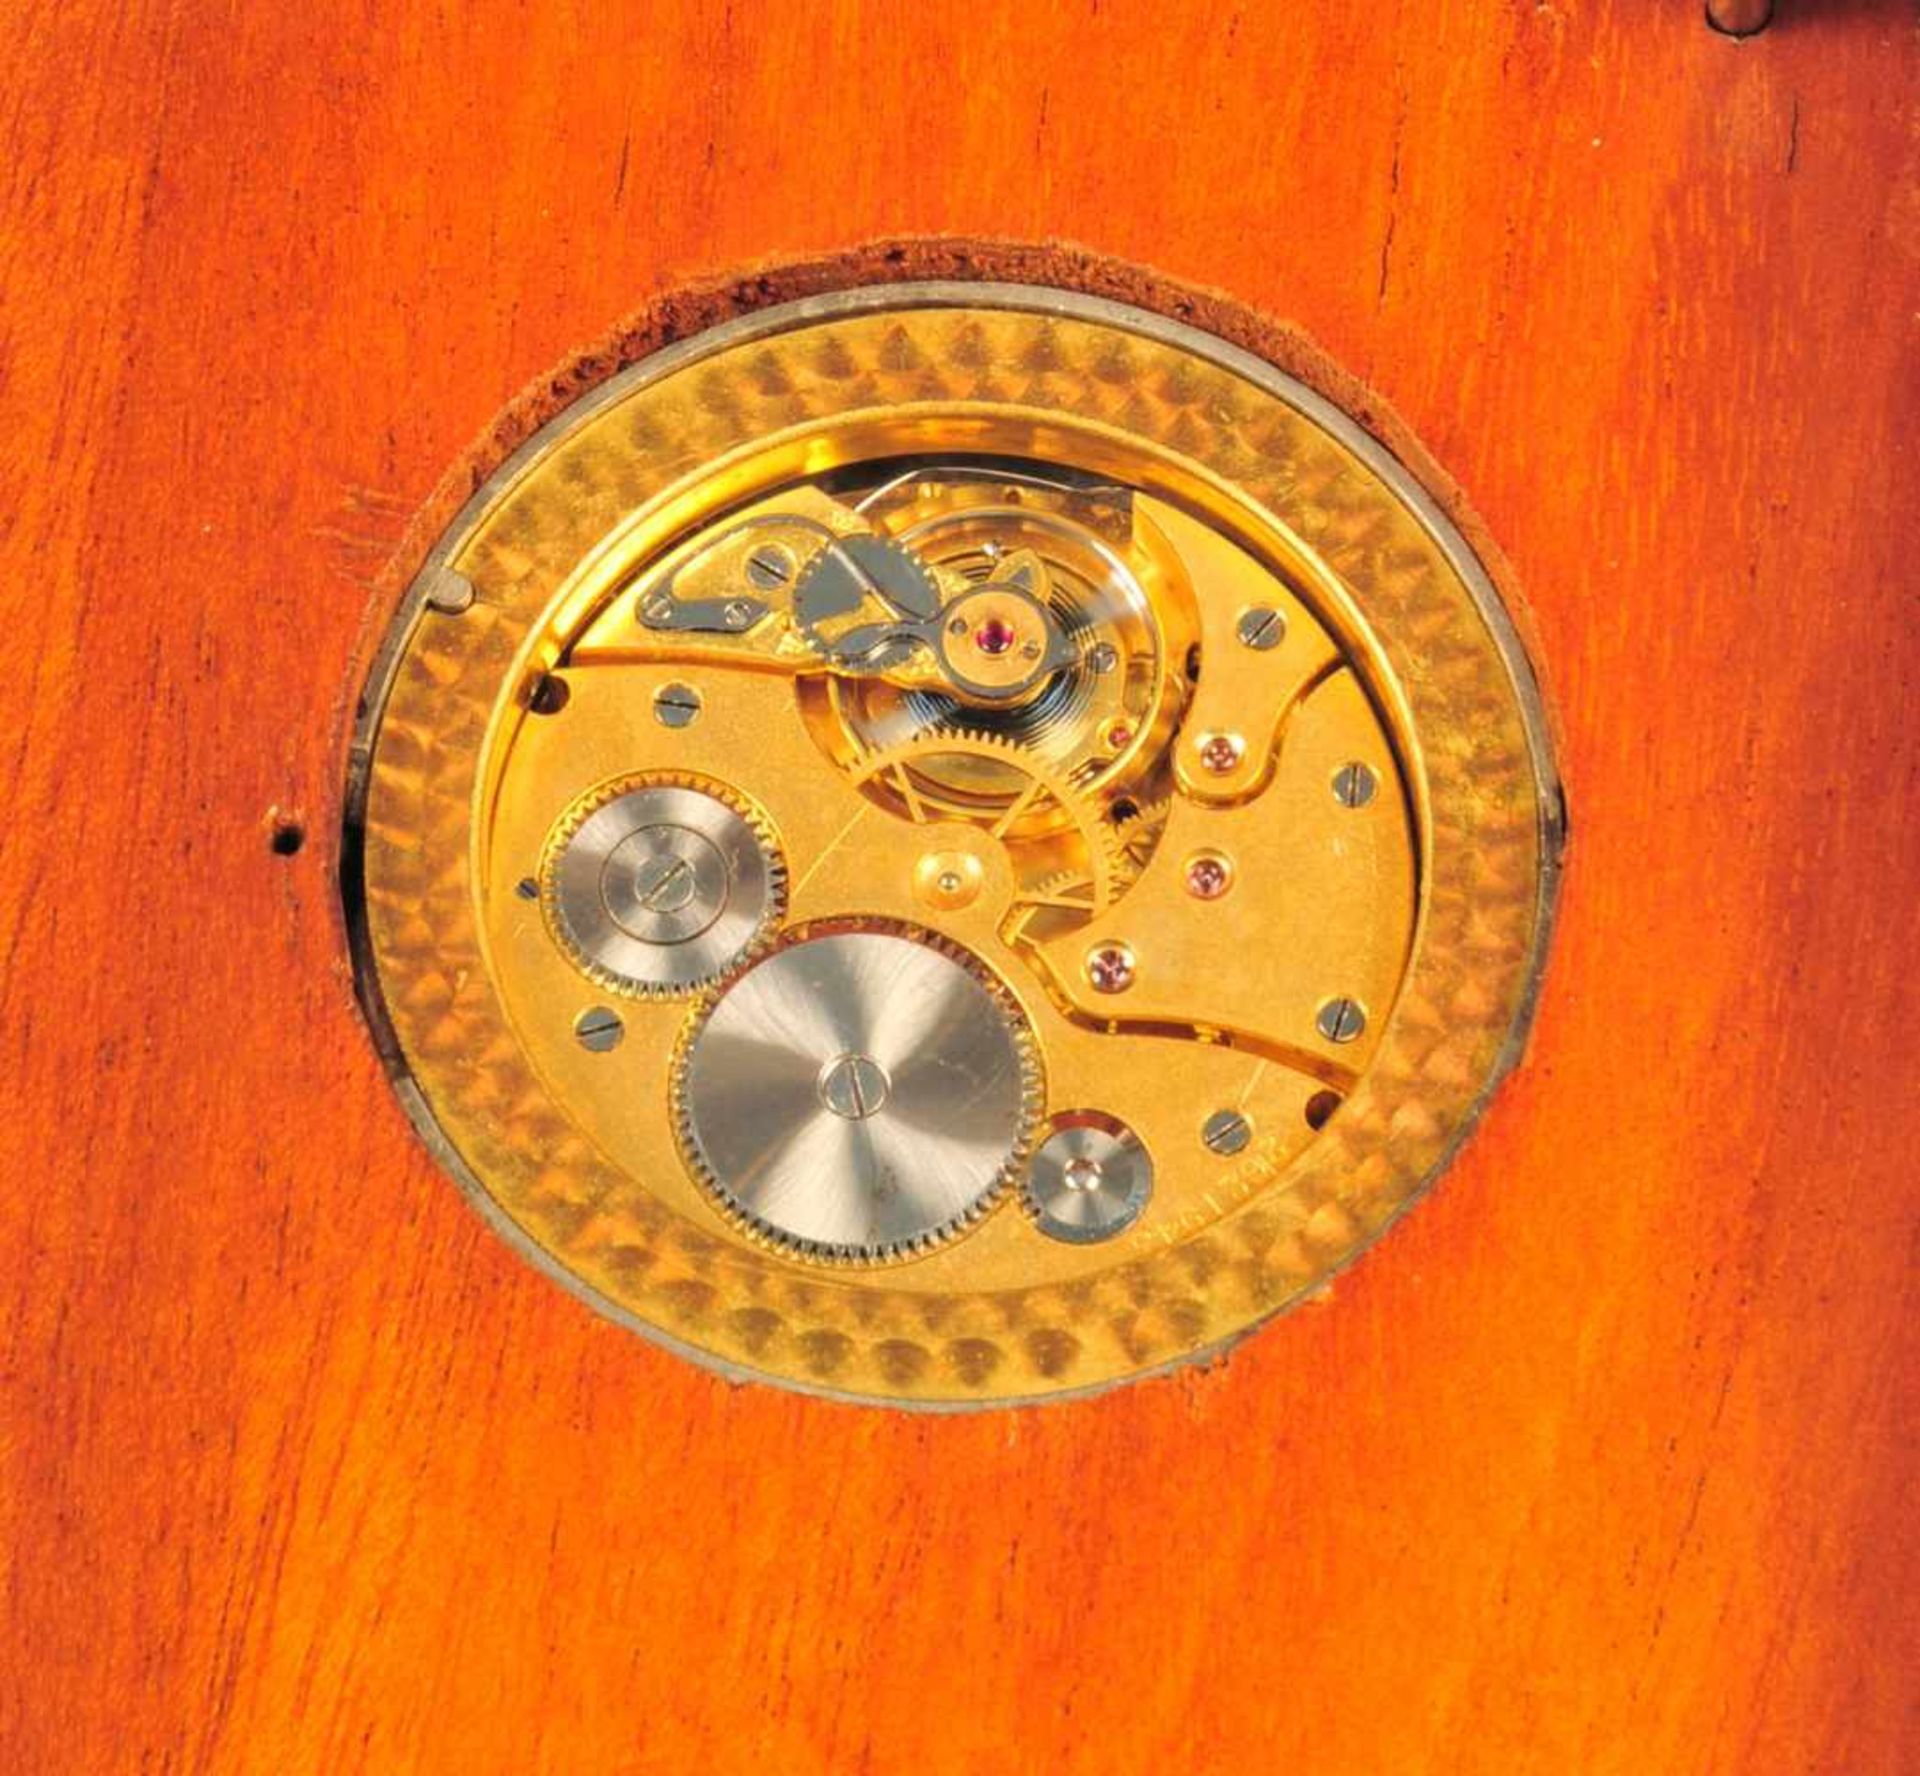 Cabin clock Zenith Chronometre "Genau Zeit"Borduhr Zenith Chronometre „Genau Zeit“ mit 40- Stunden- - Bild 2 aus 2